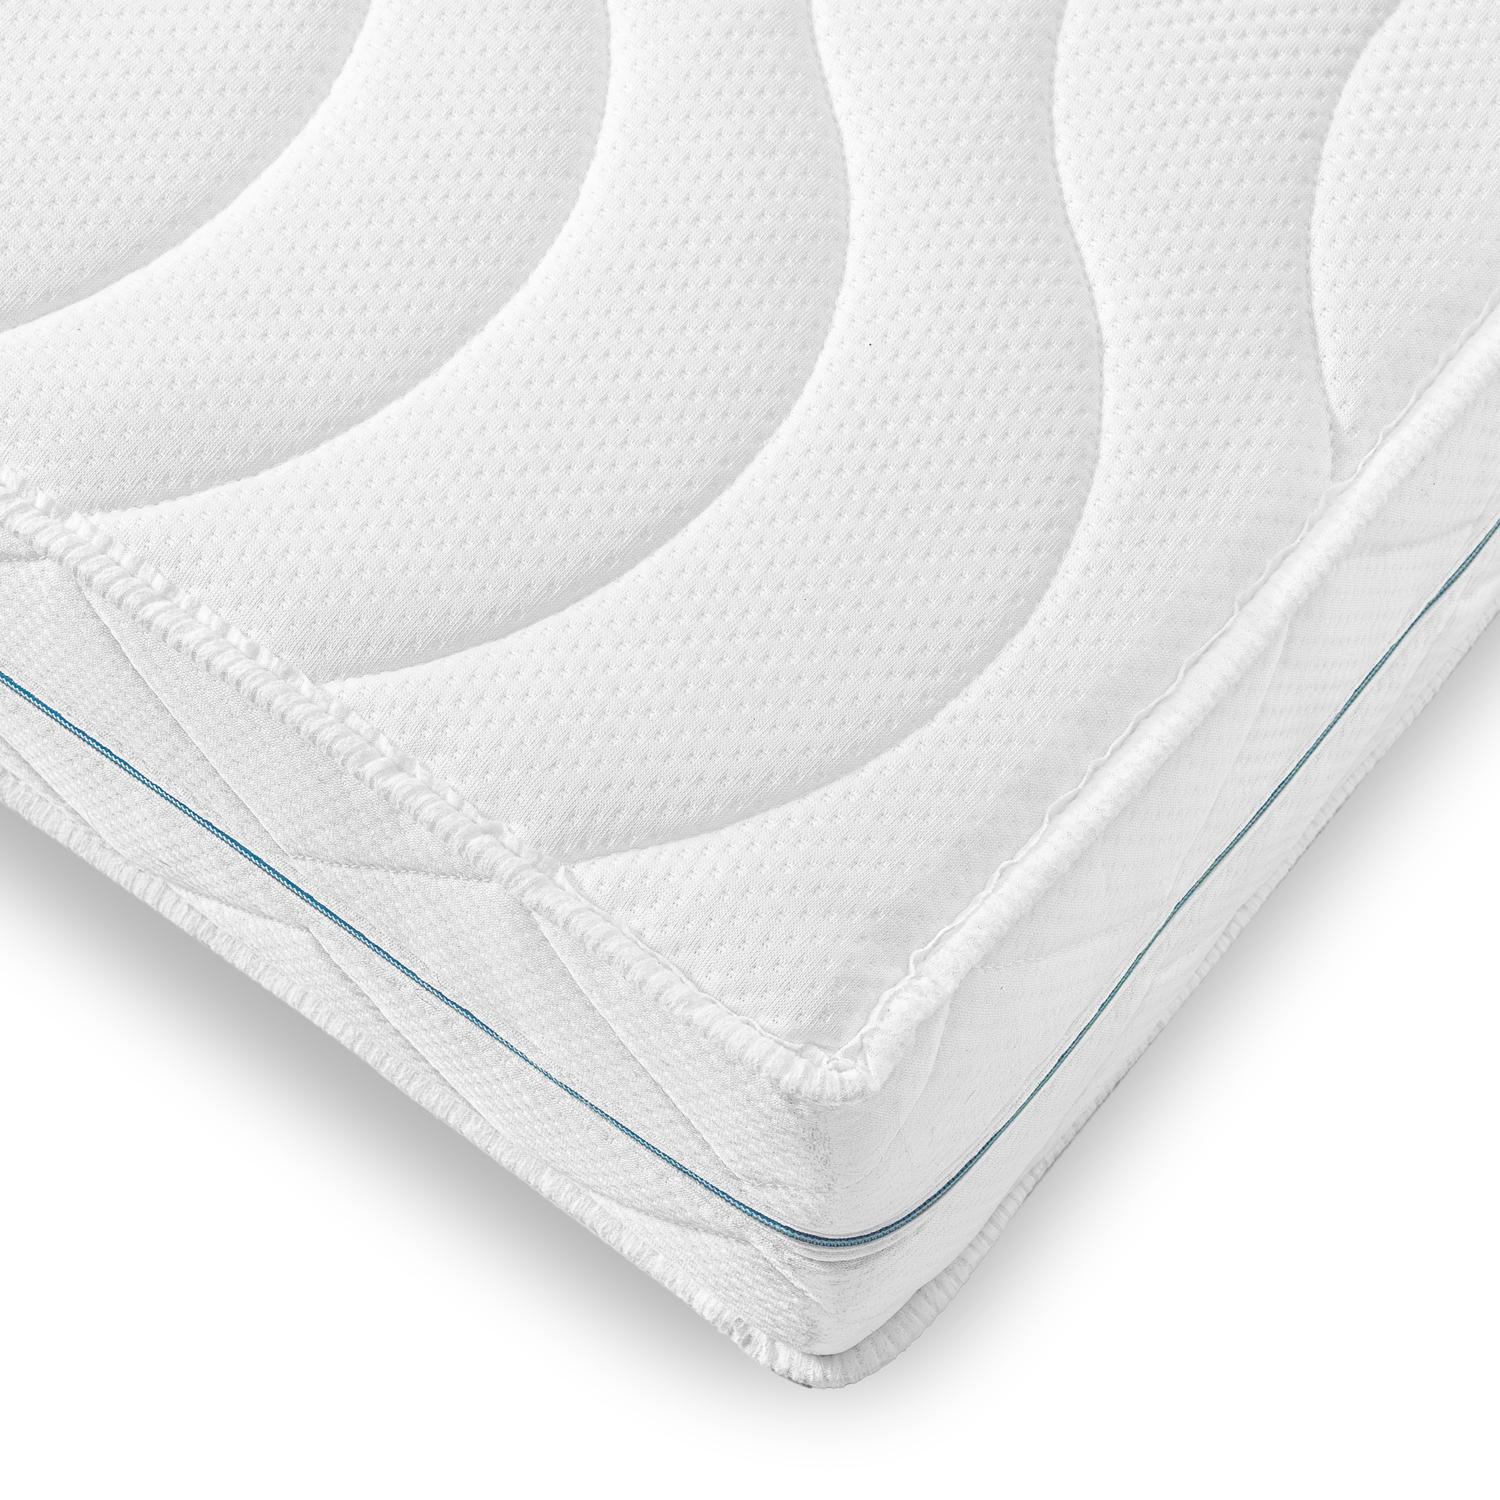 Supportho Premium mattress cover 120 x 200 cm, height 18 cm